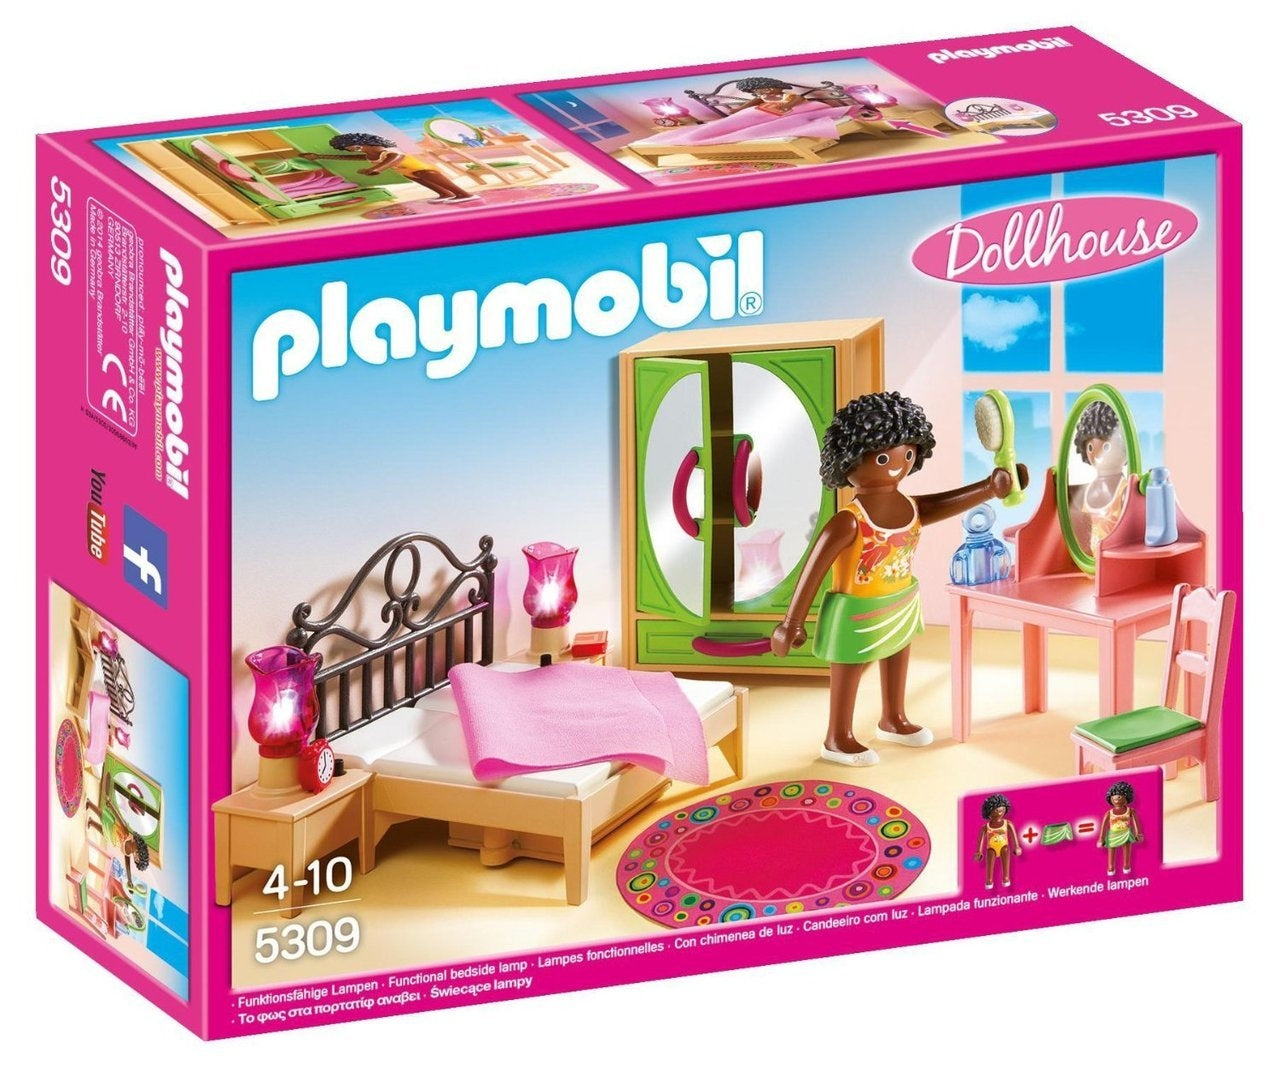 Master Bedroom - Playmobi